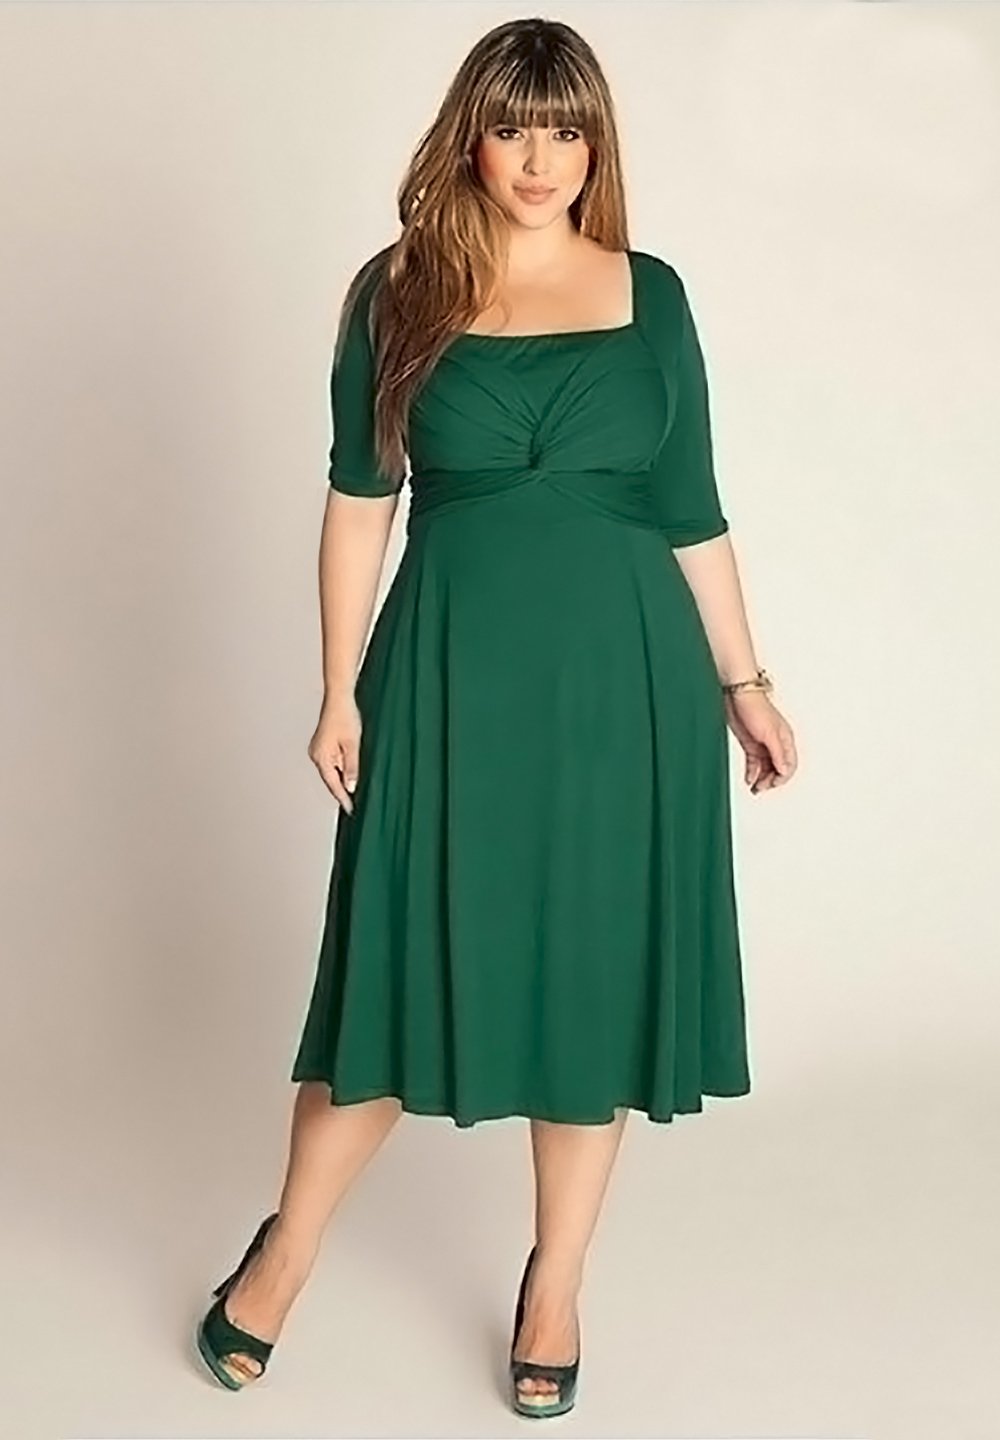 Emerald plus size dress | IGIGI.com